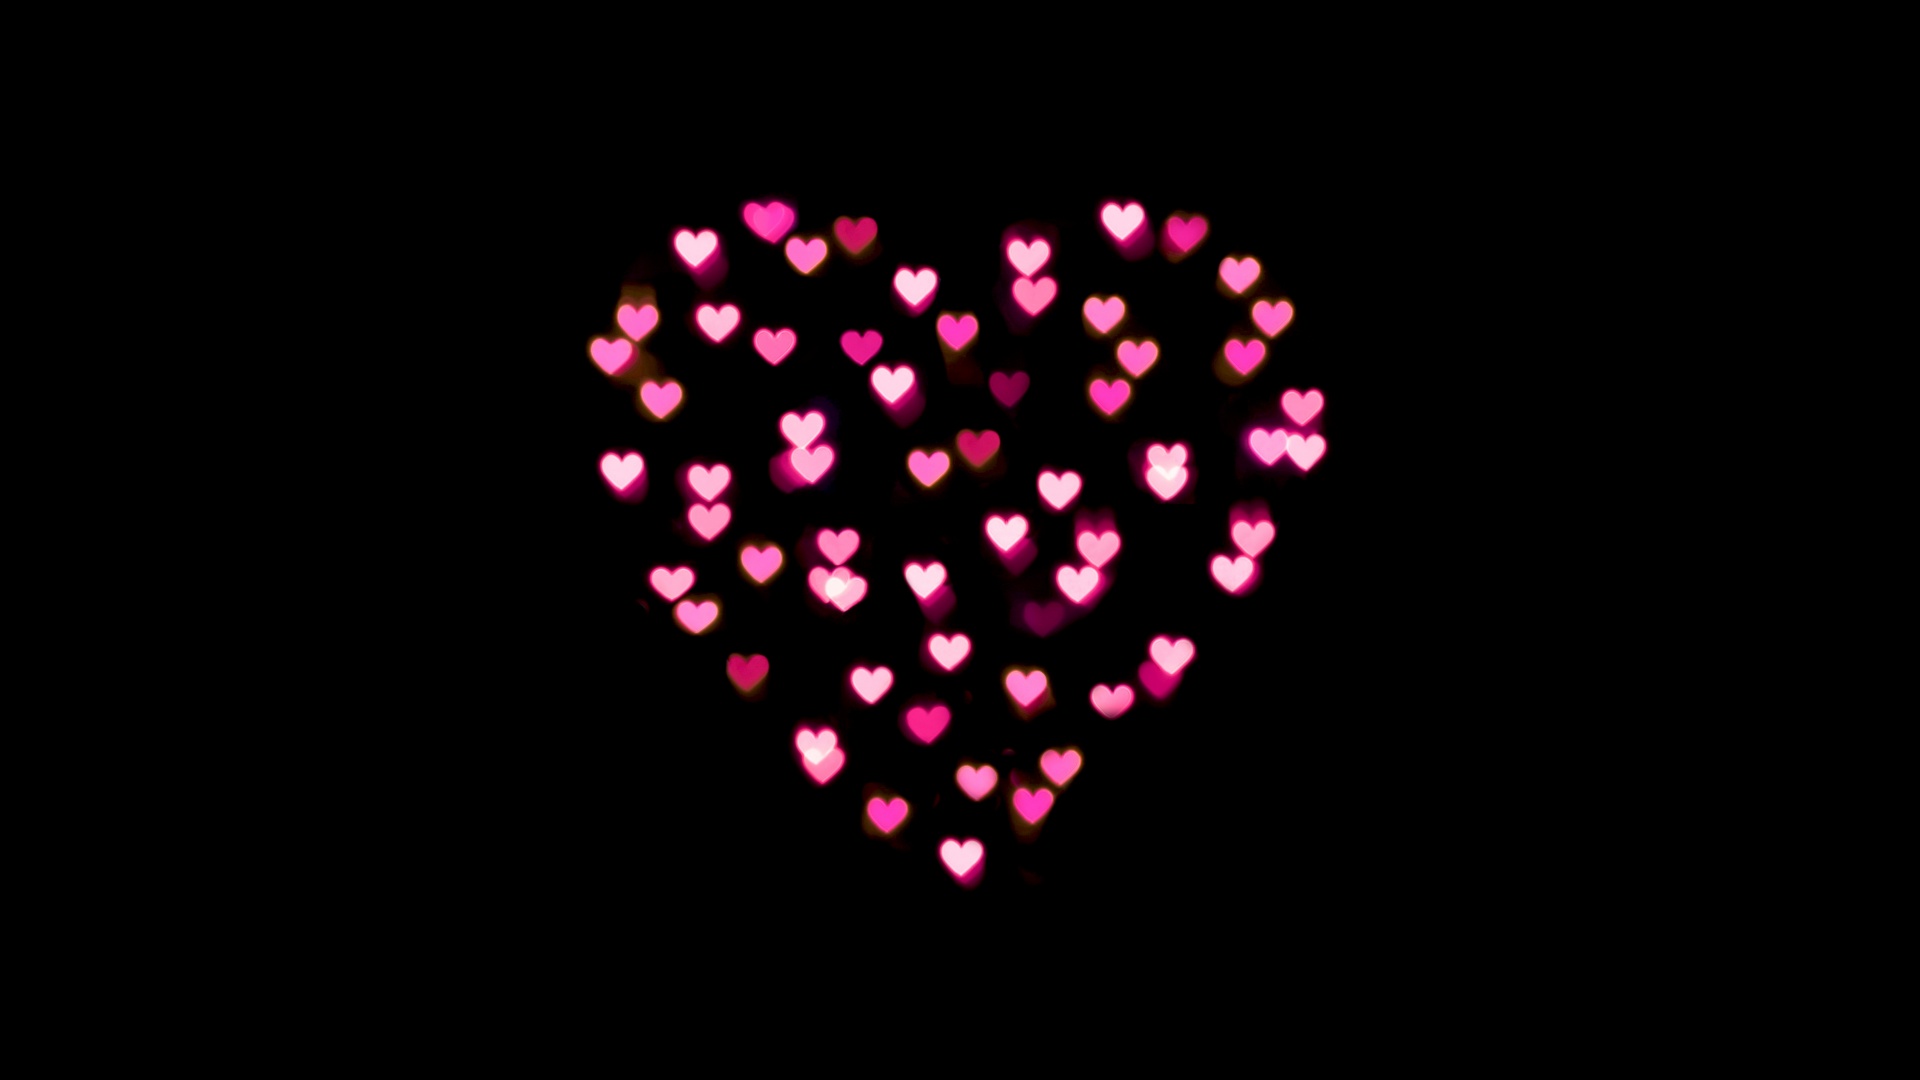 Love heart Wallpaper 4K, Pink hearts, Lights, Night, Black background